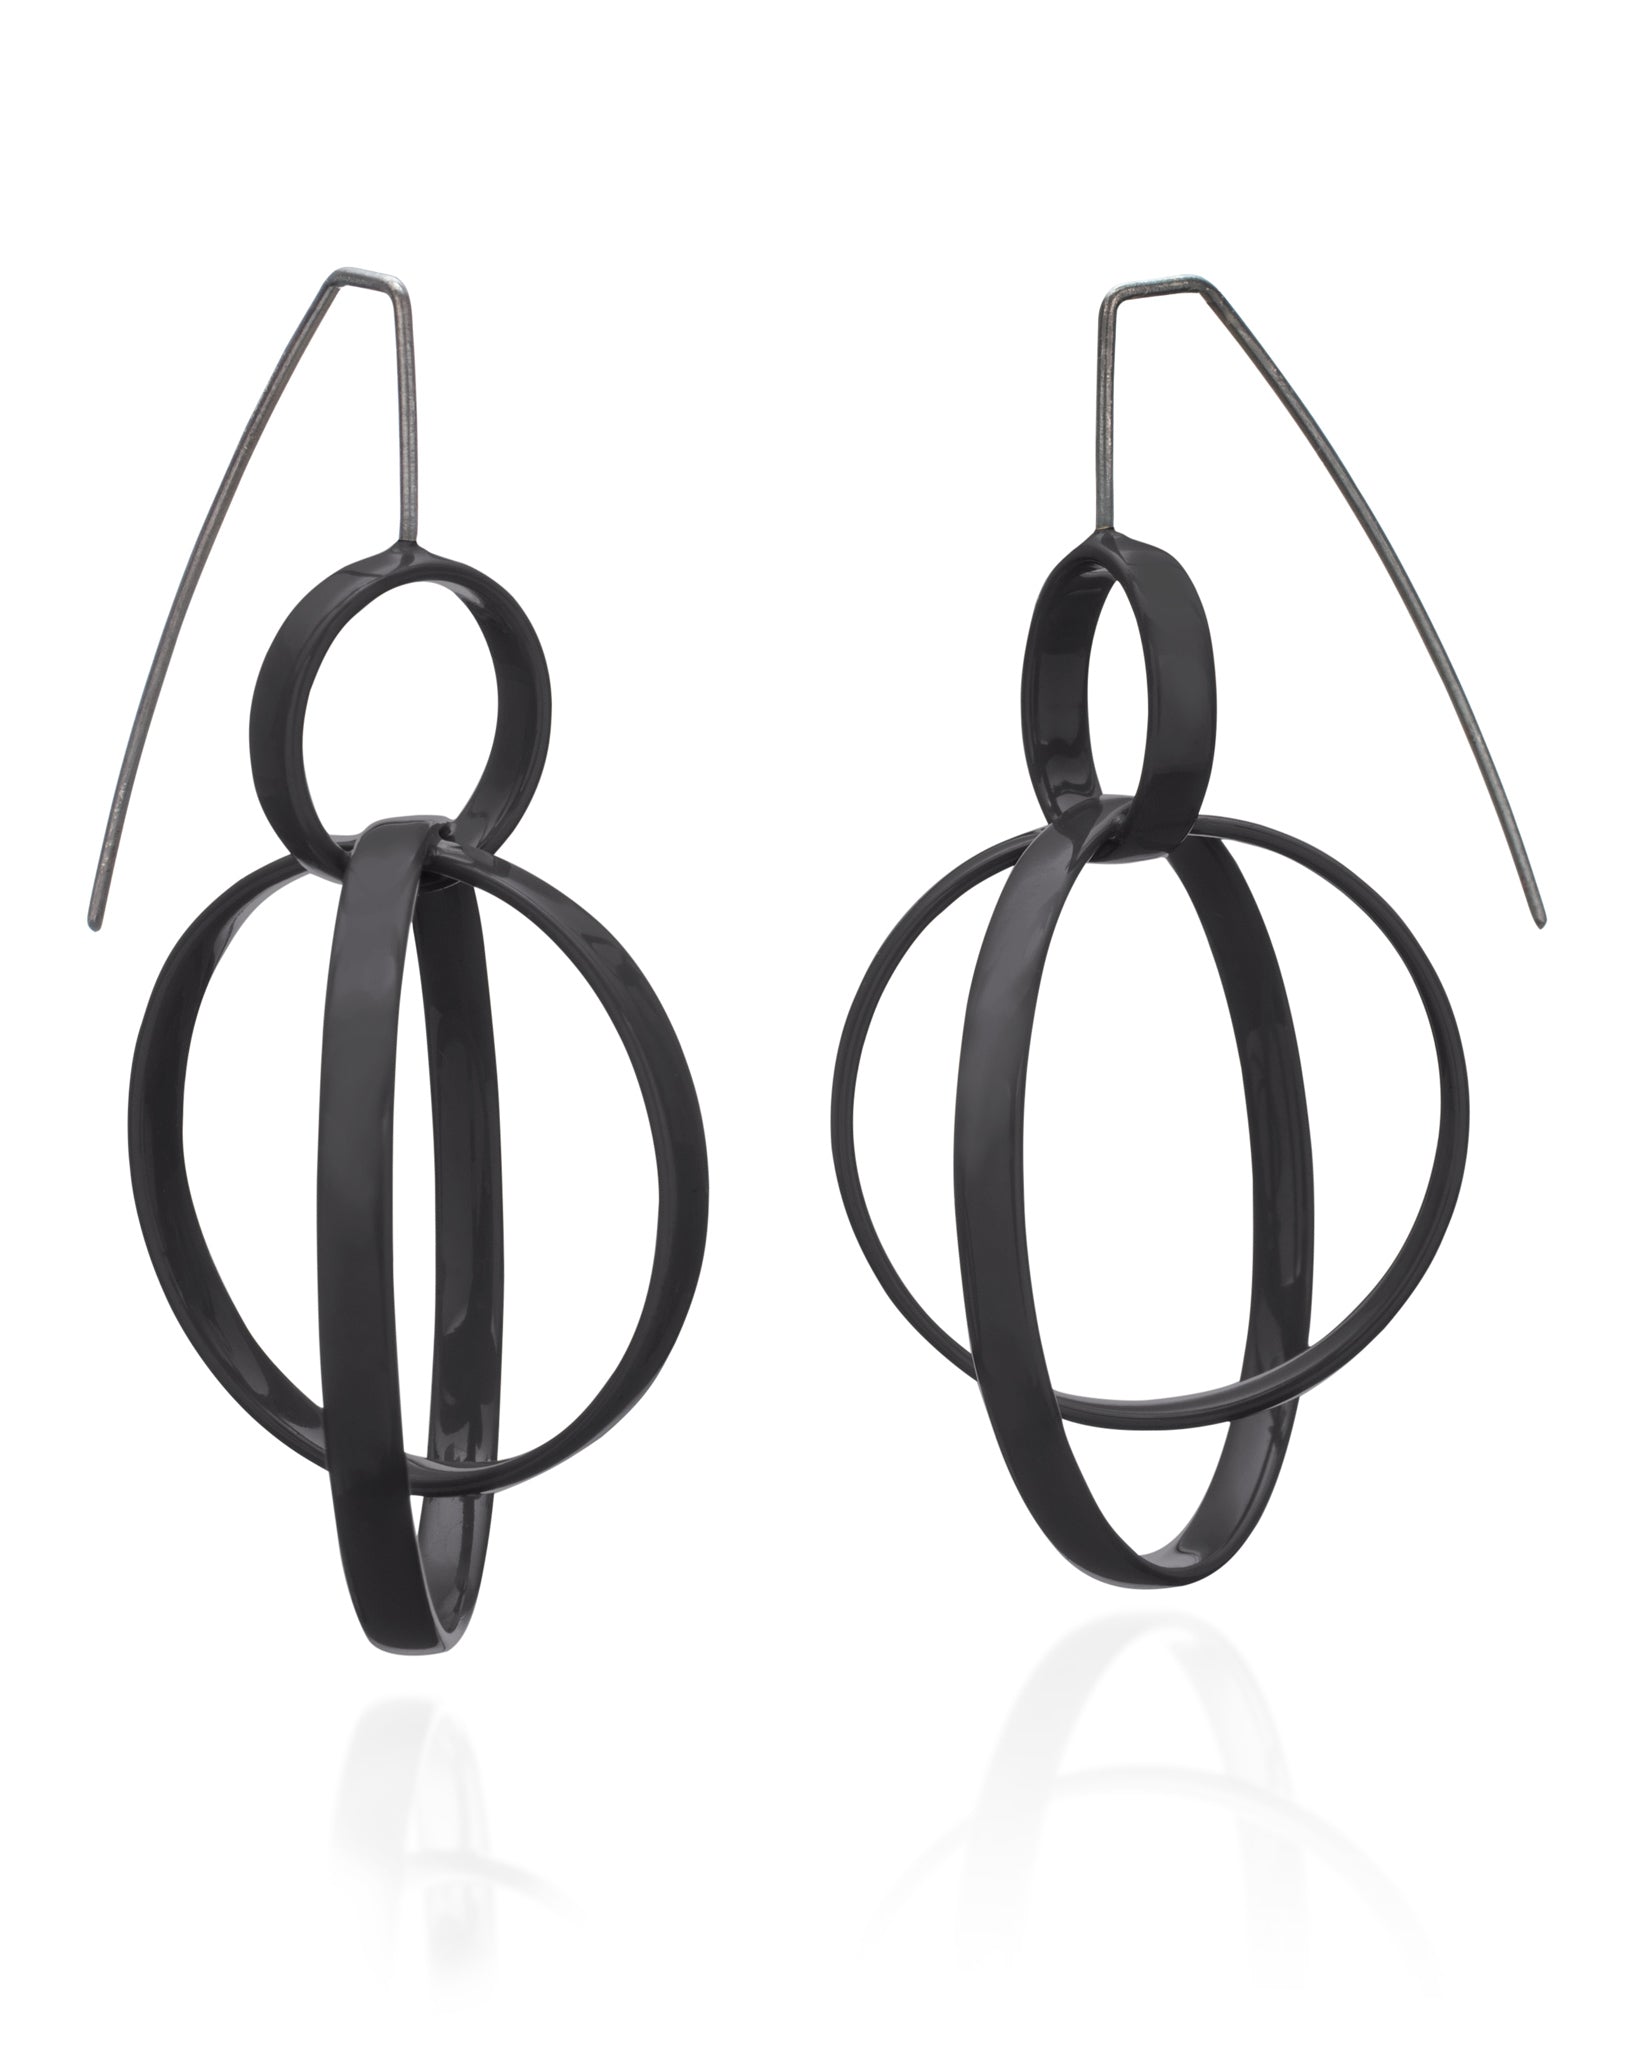 Black rodium polish stylish earrings / tops/ studs | Classy Missy by Gur